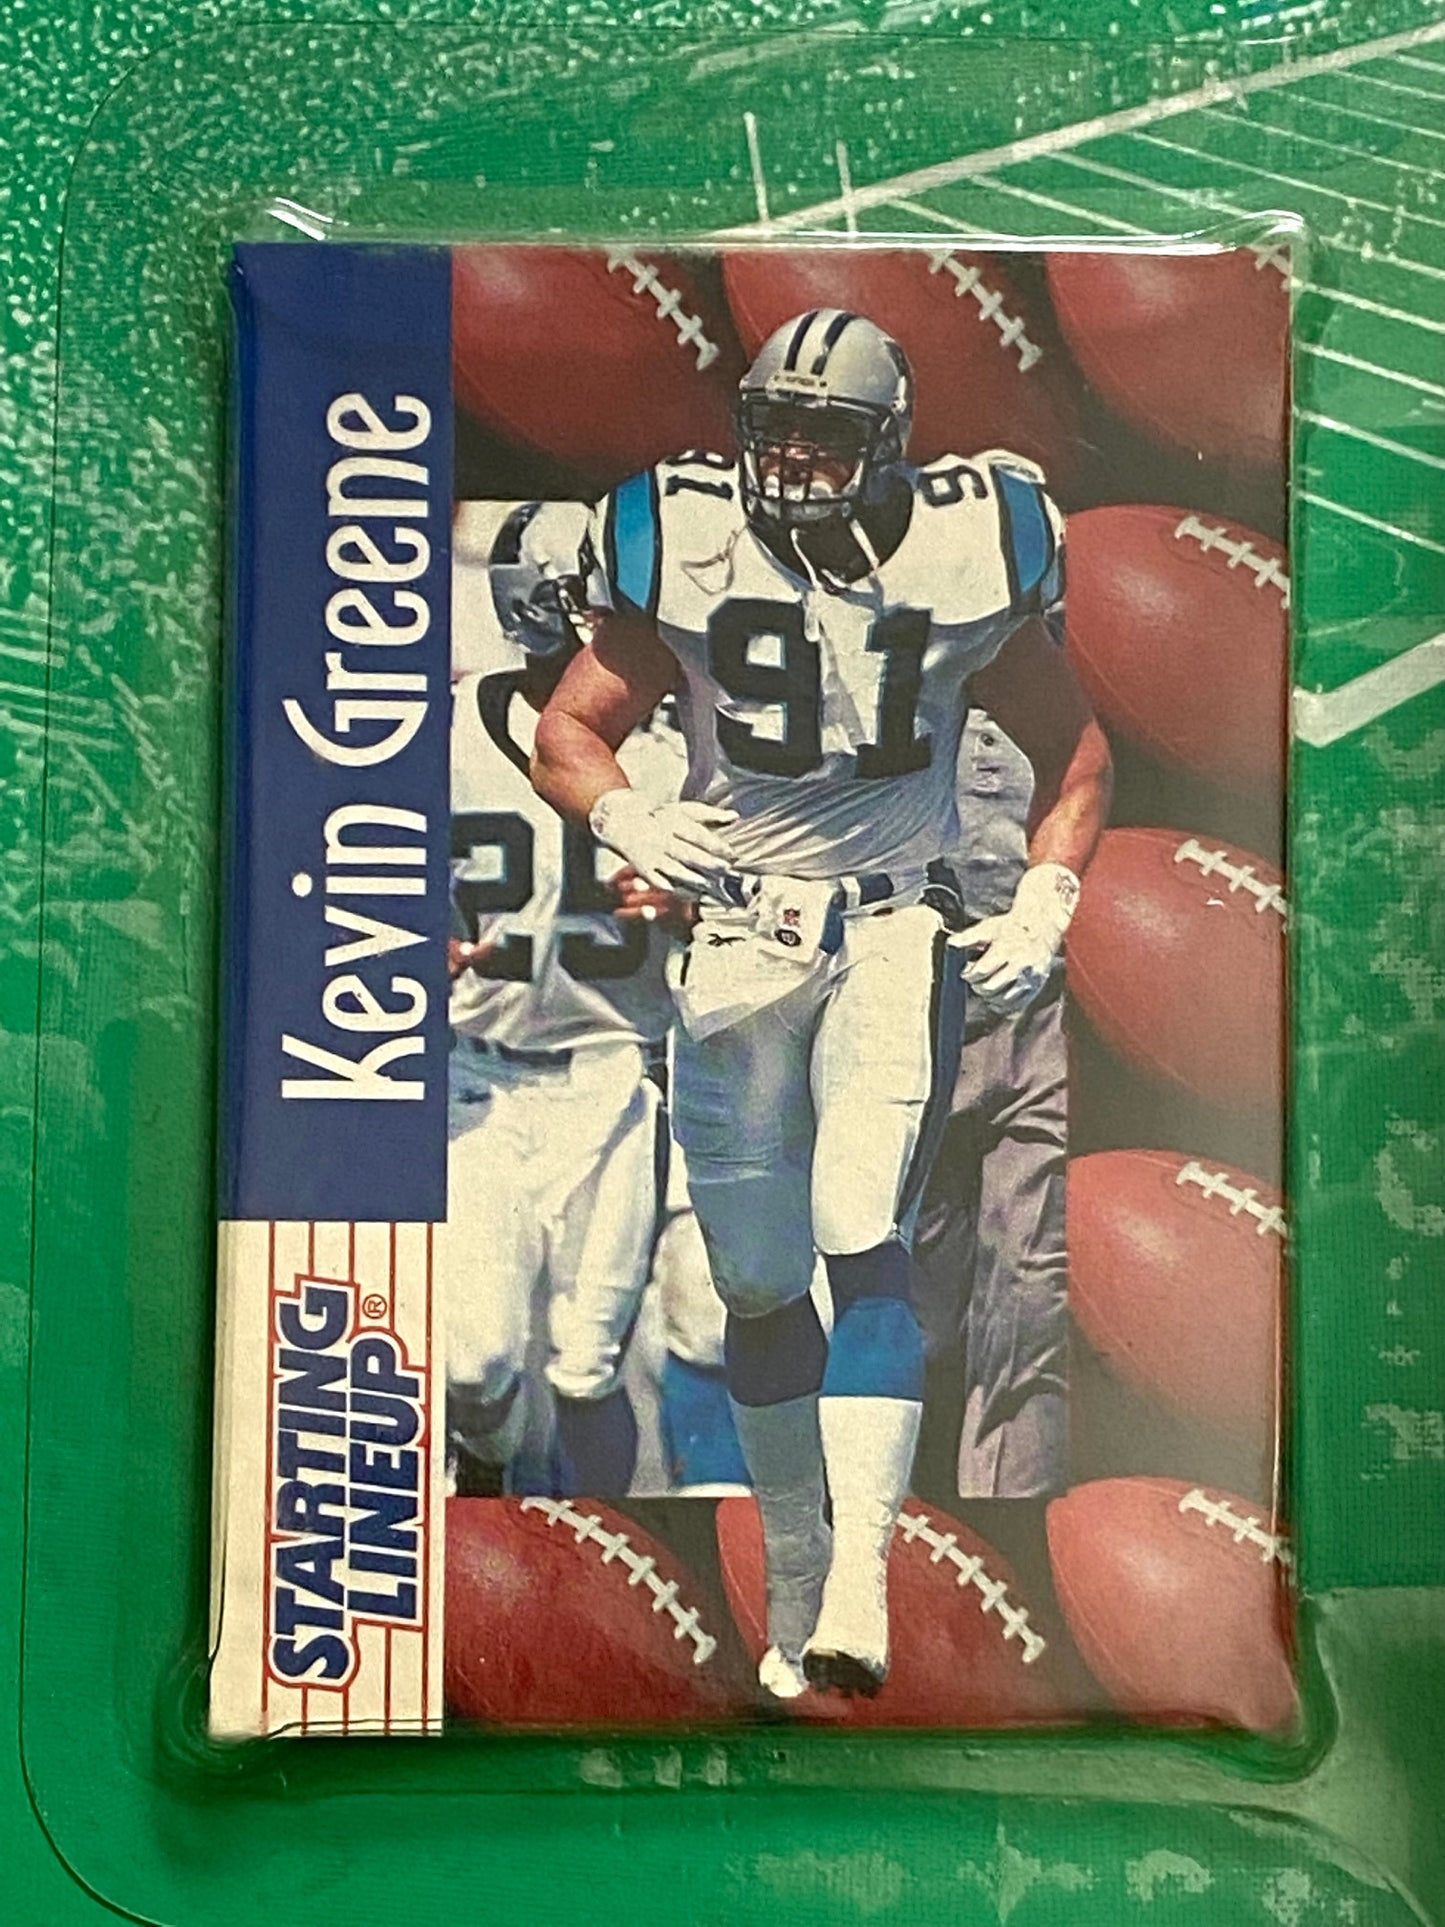 Kevin Greene 1997 Carolina Panthers NFL Starting Lineup Figurine NOS by Kenner